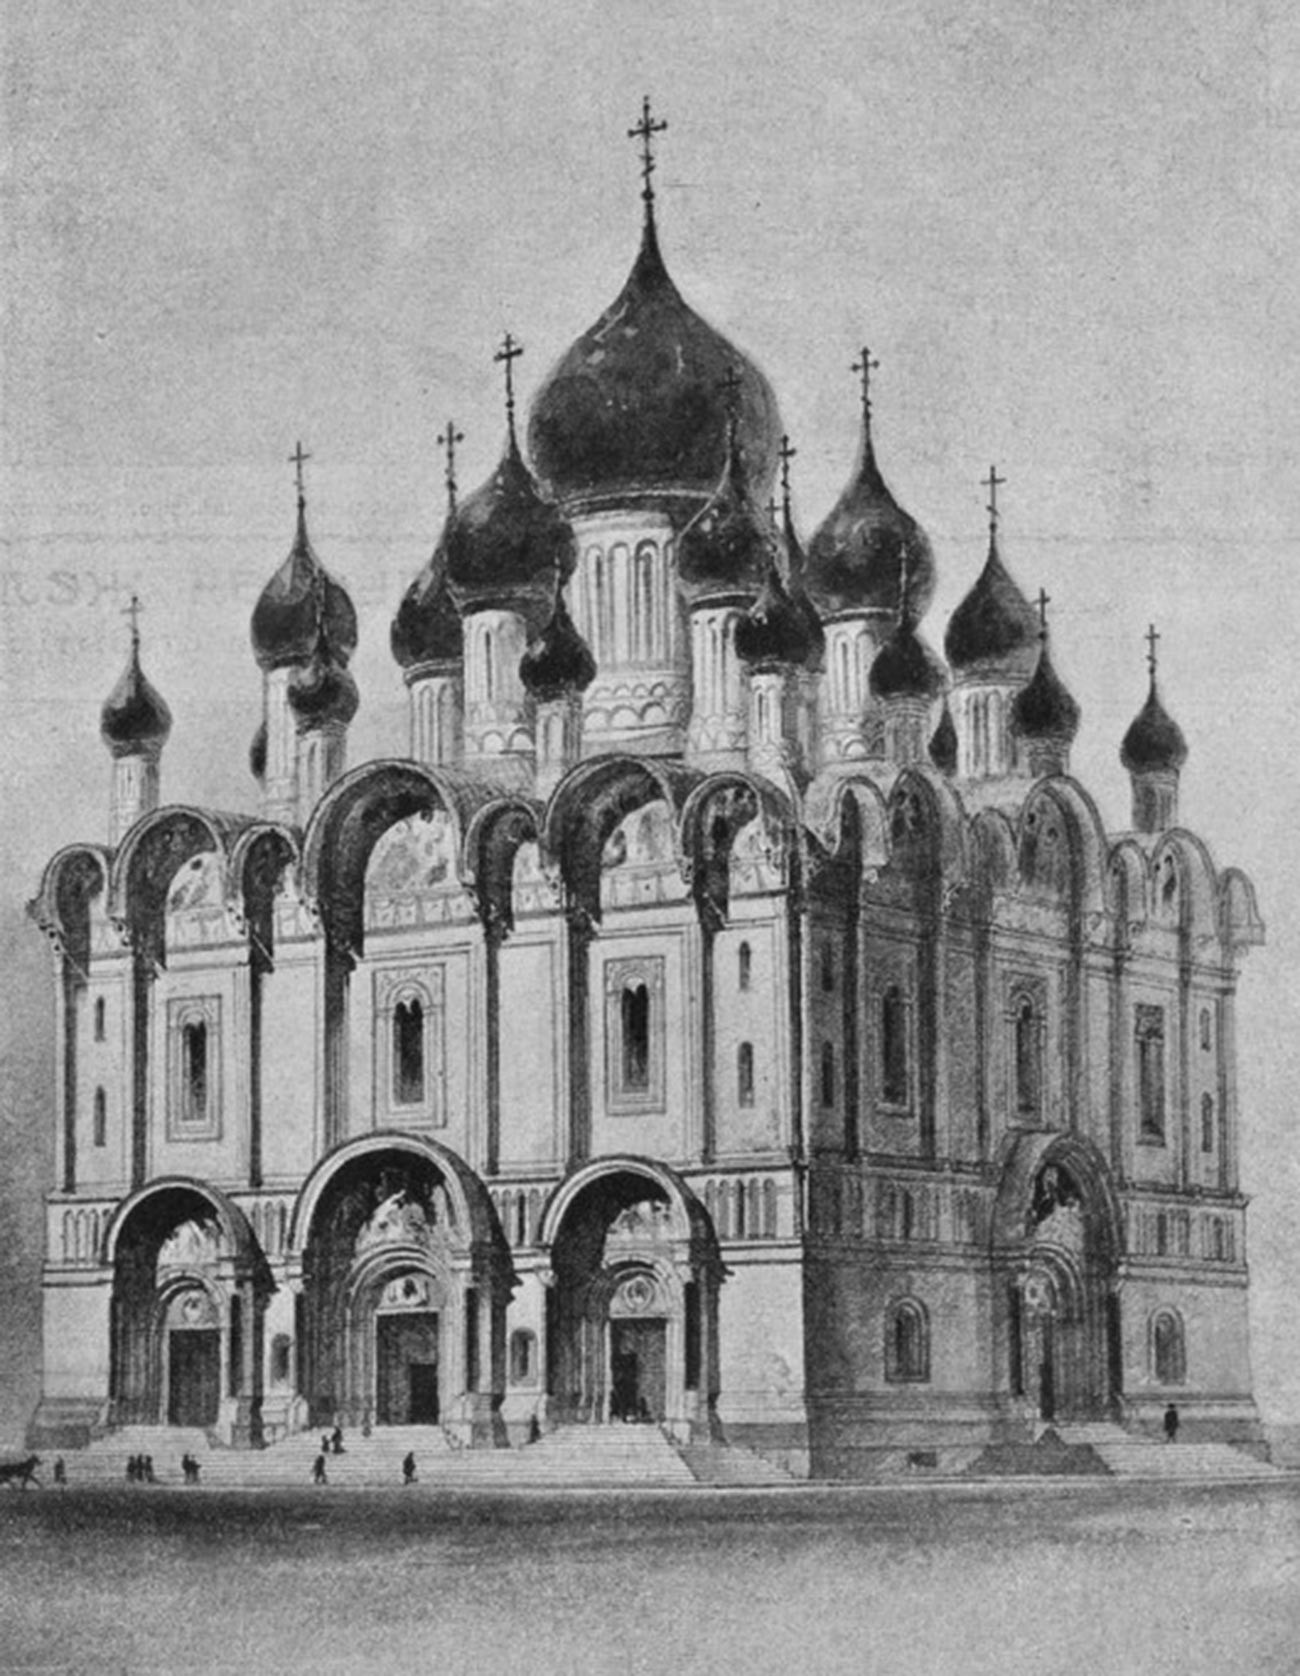 Zunanjost katedrale. Risba po projektu A. N. Pomeranceva, 1904
